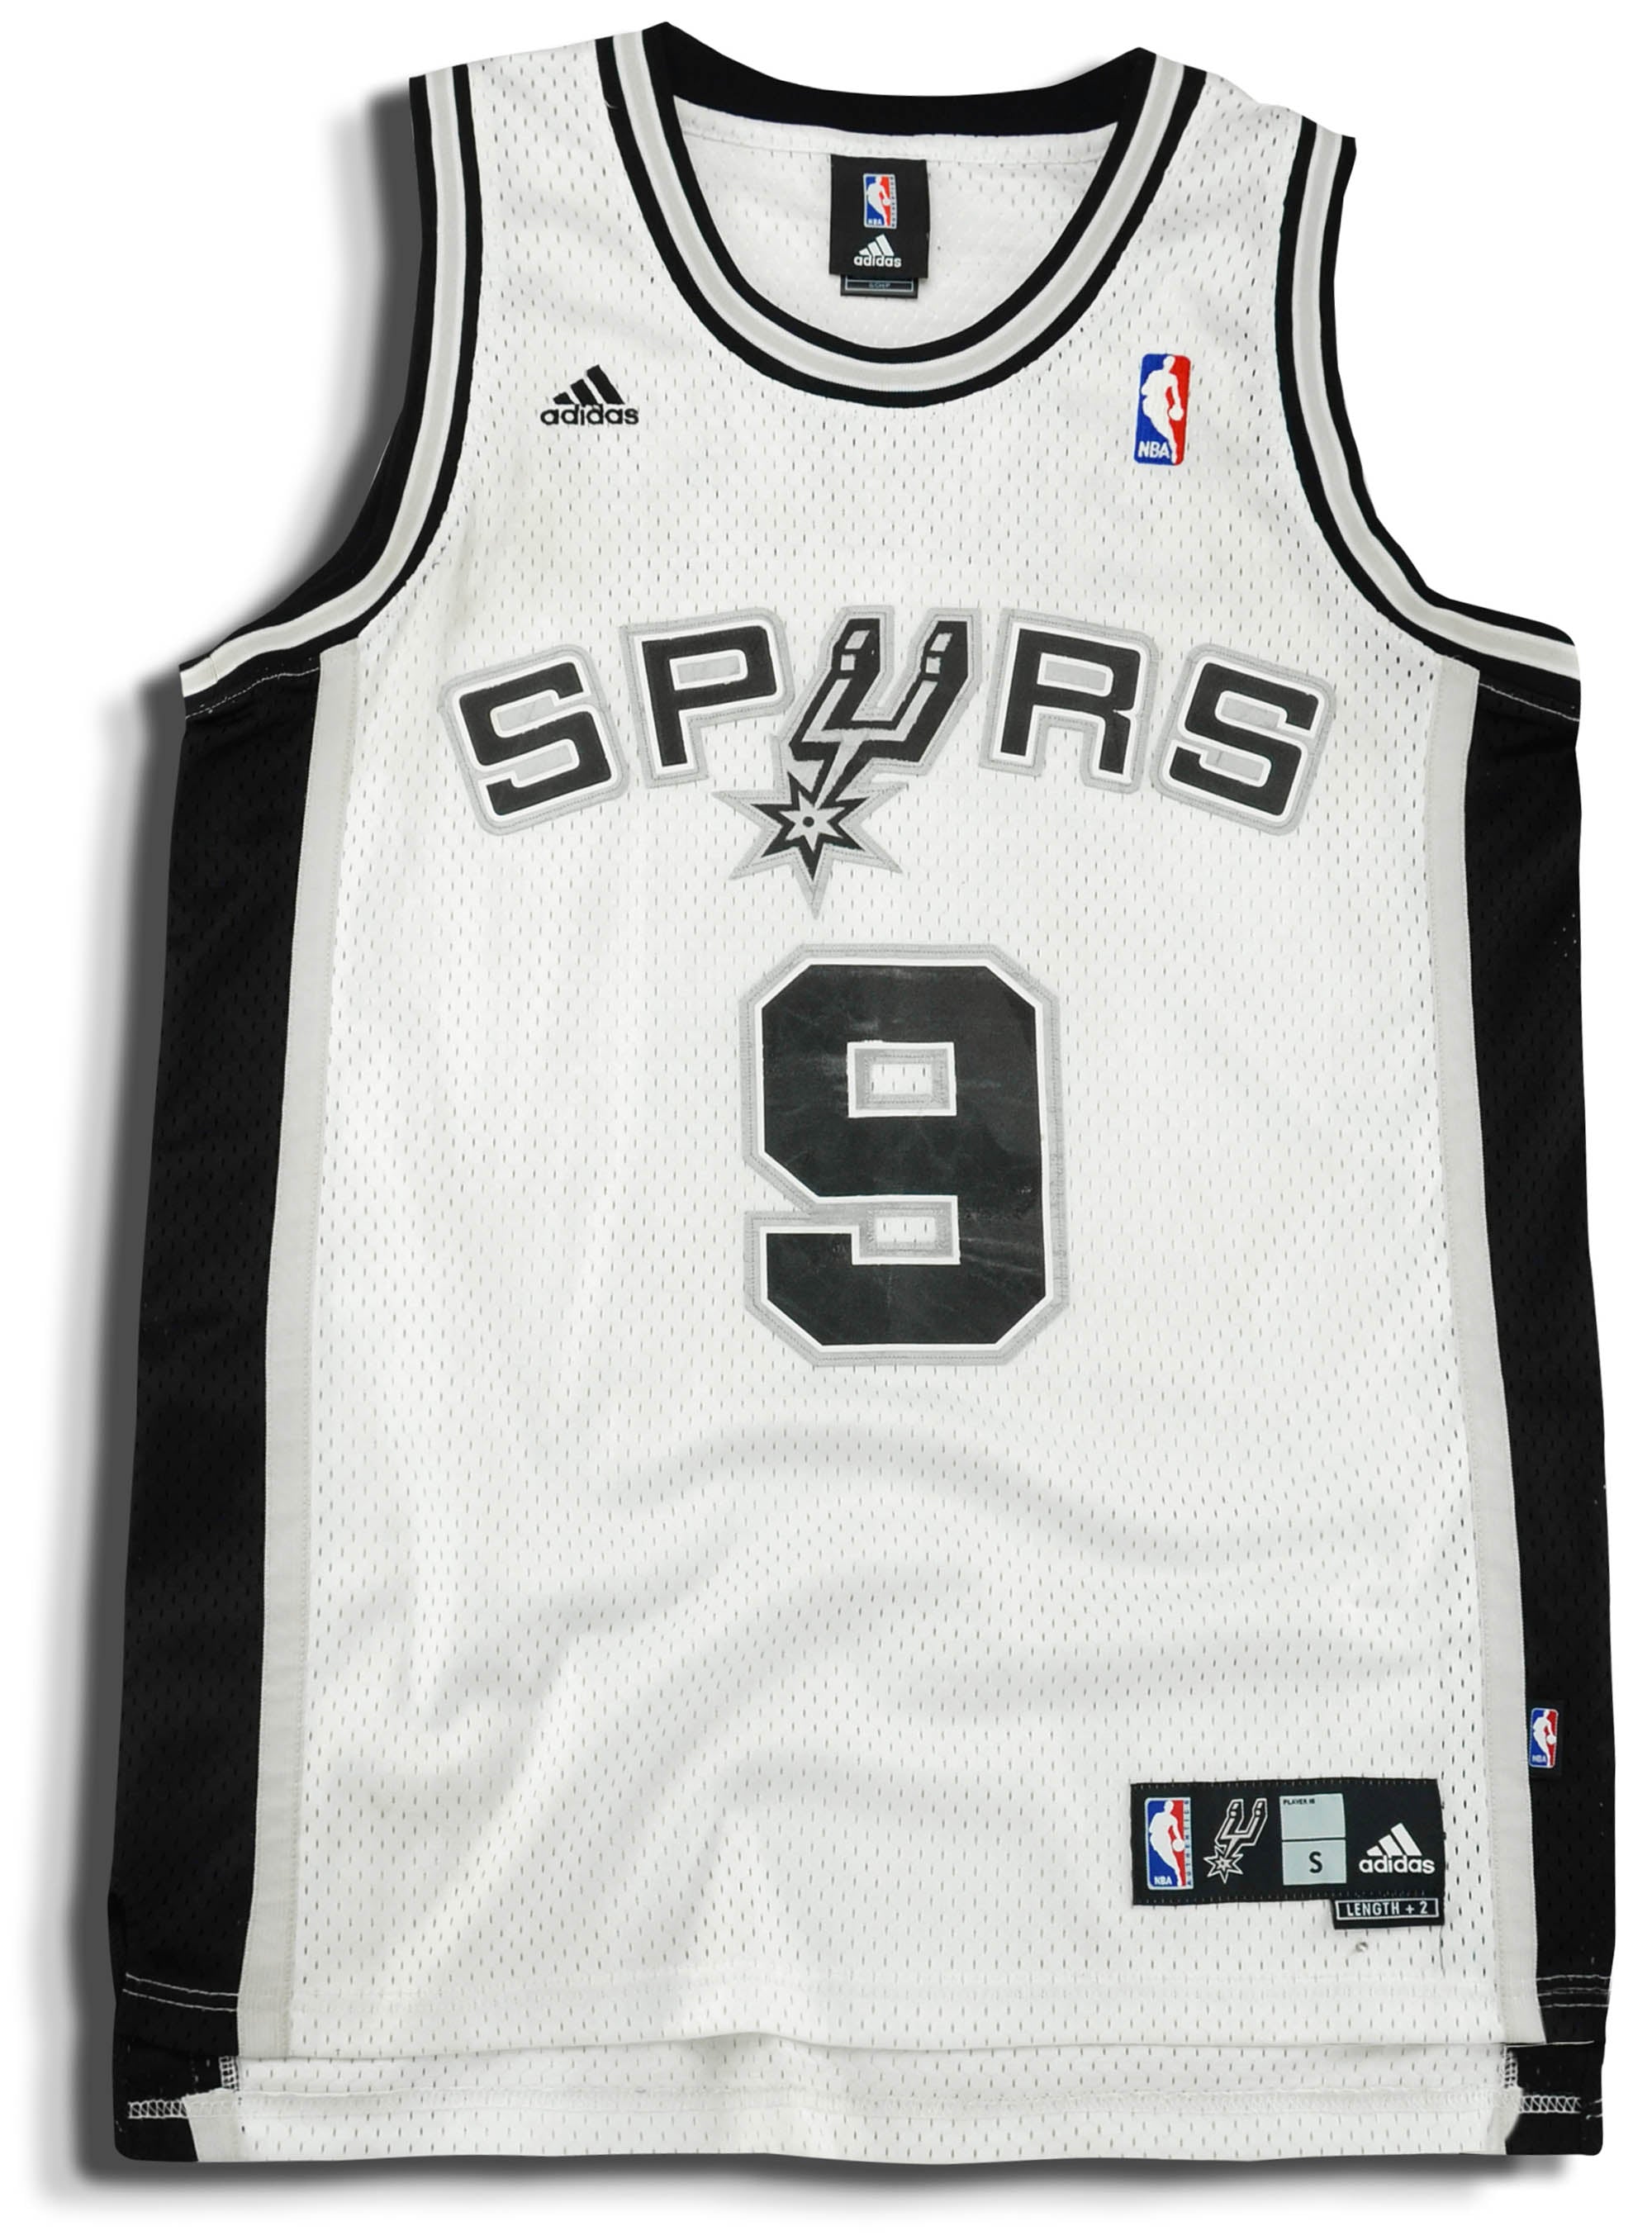 Nike NBA San Antonio Spurs Tony Parker #9 Jersey Size S.